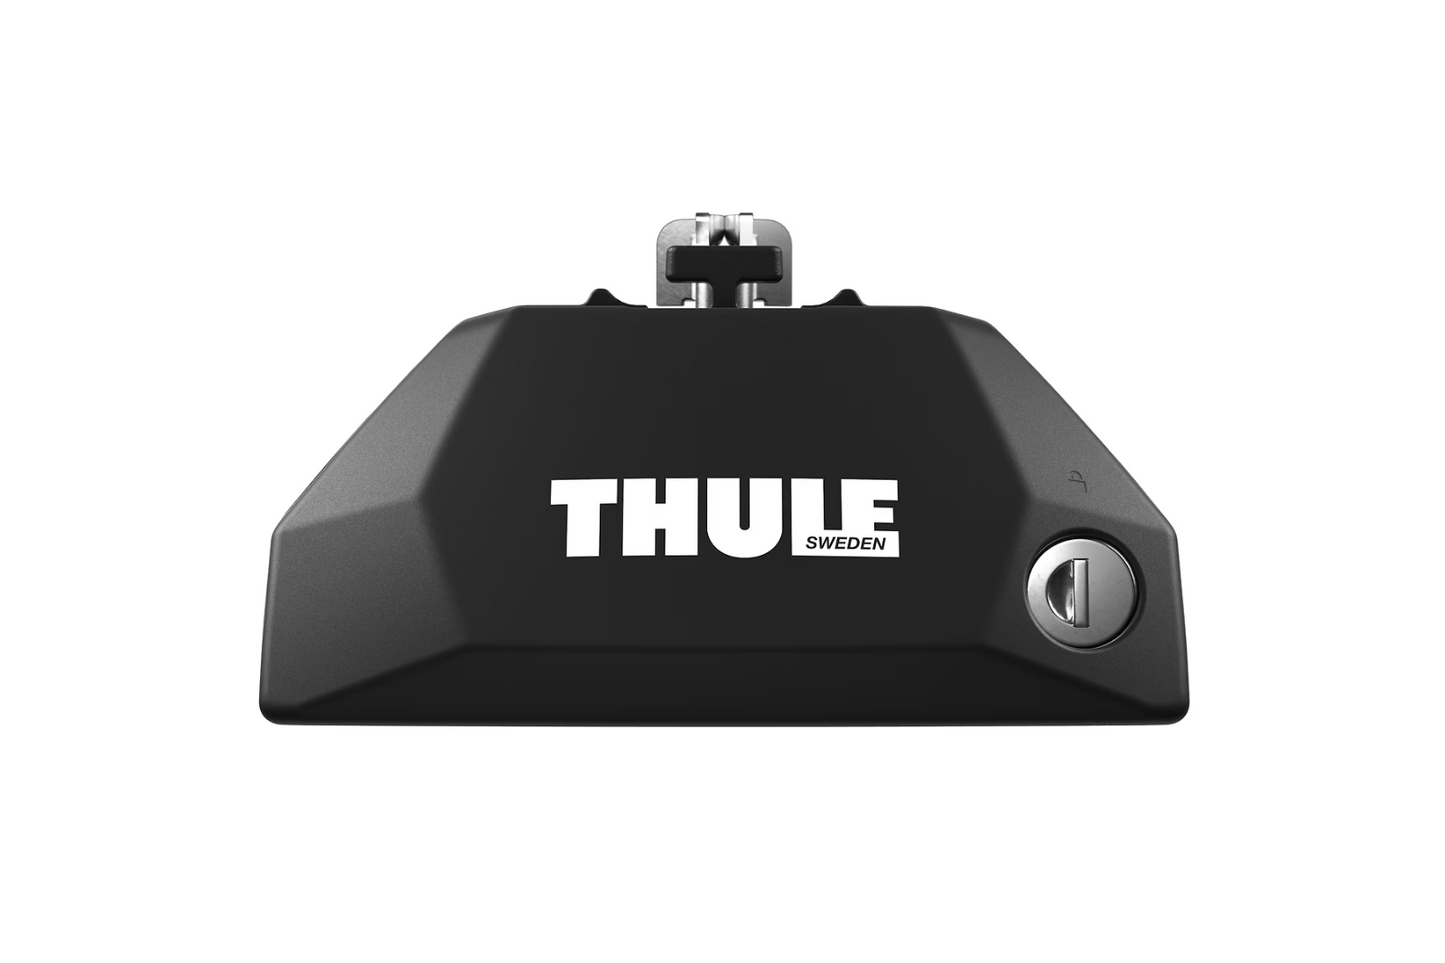 Thule 7106 Evo Flush Rail / Footpack (Set of 4 Feet) 710600